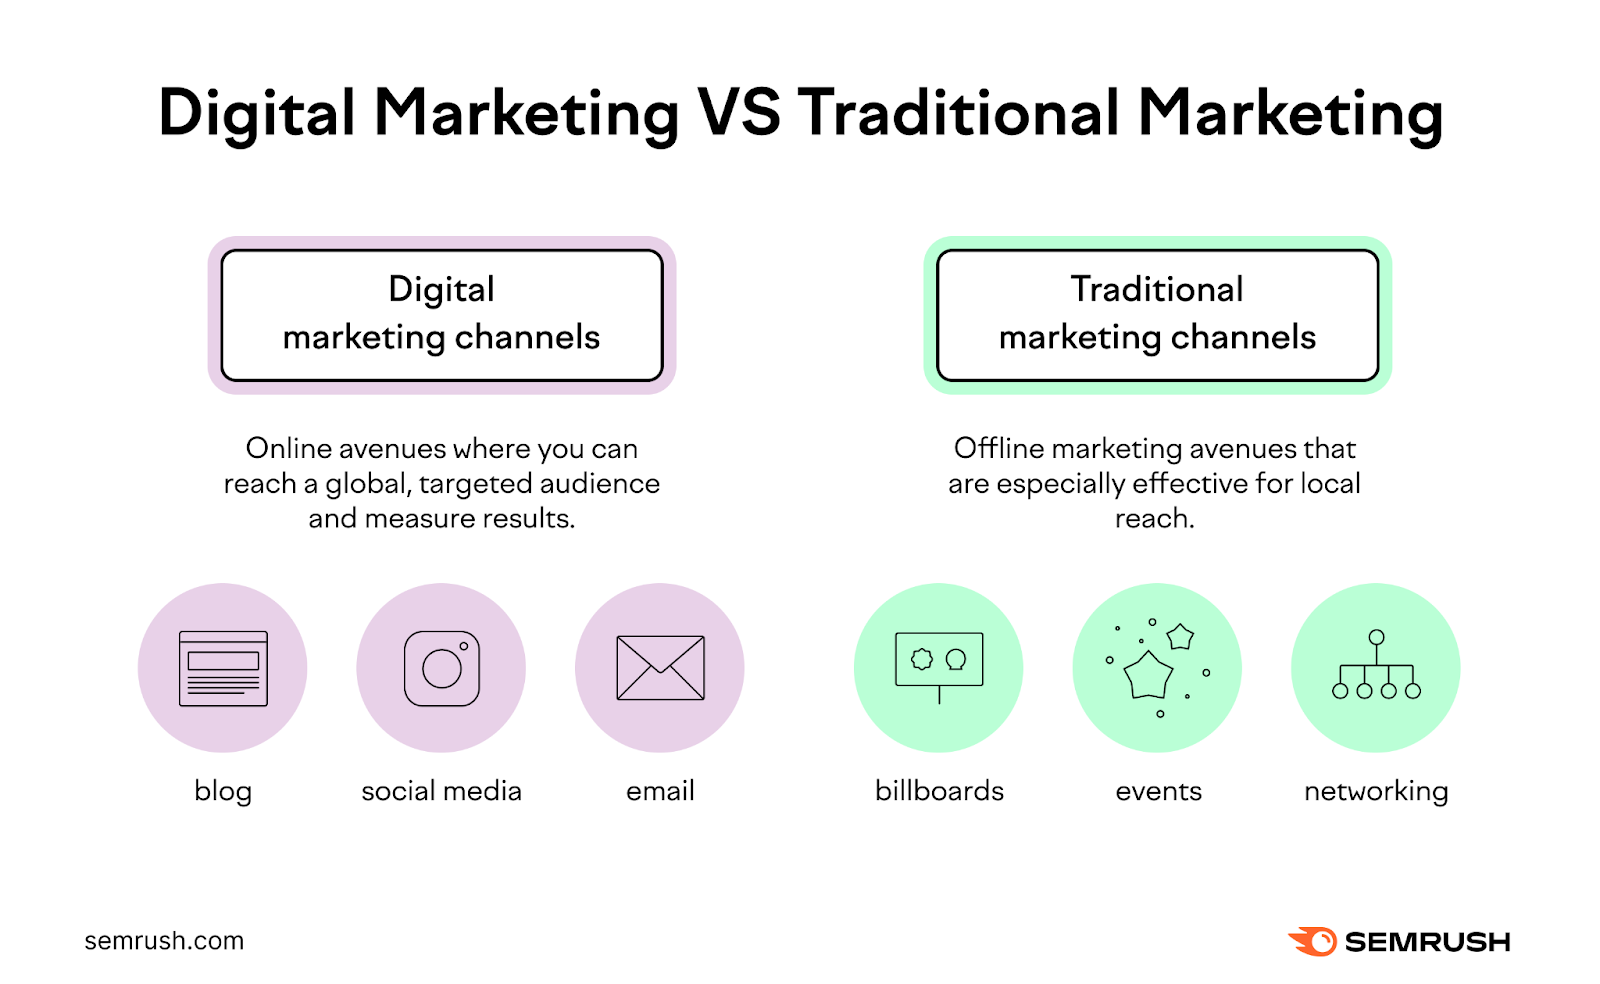 Digital marketing vs traditional marketing